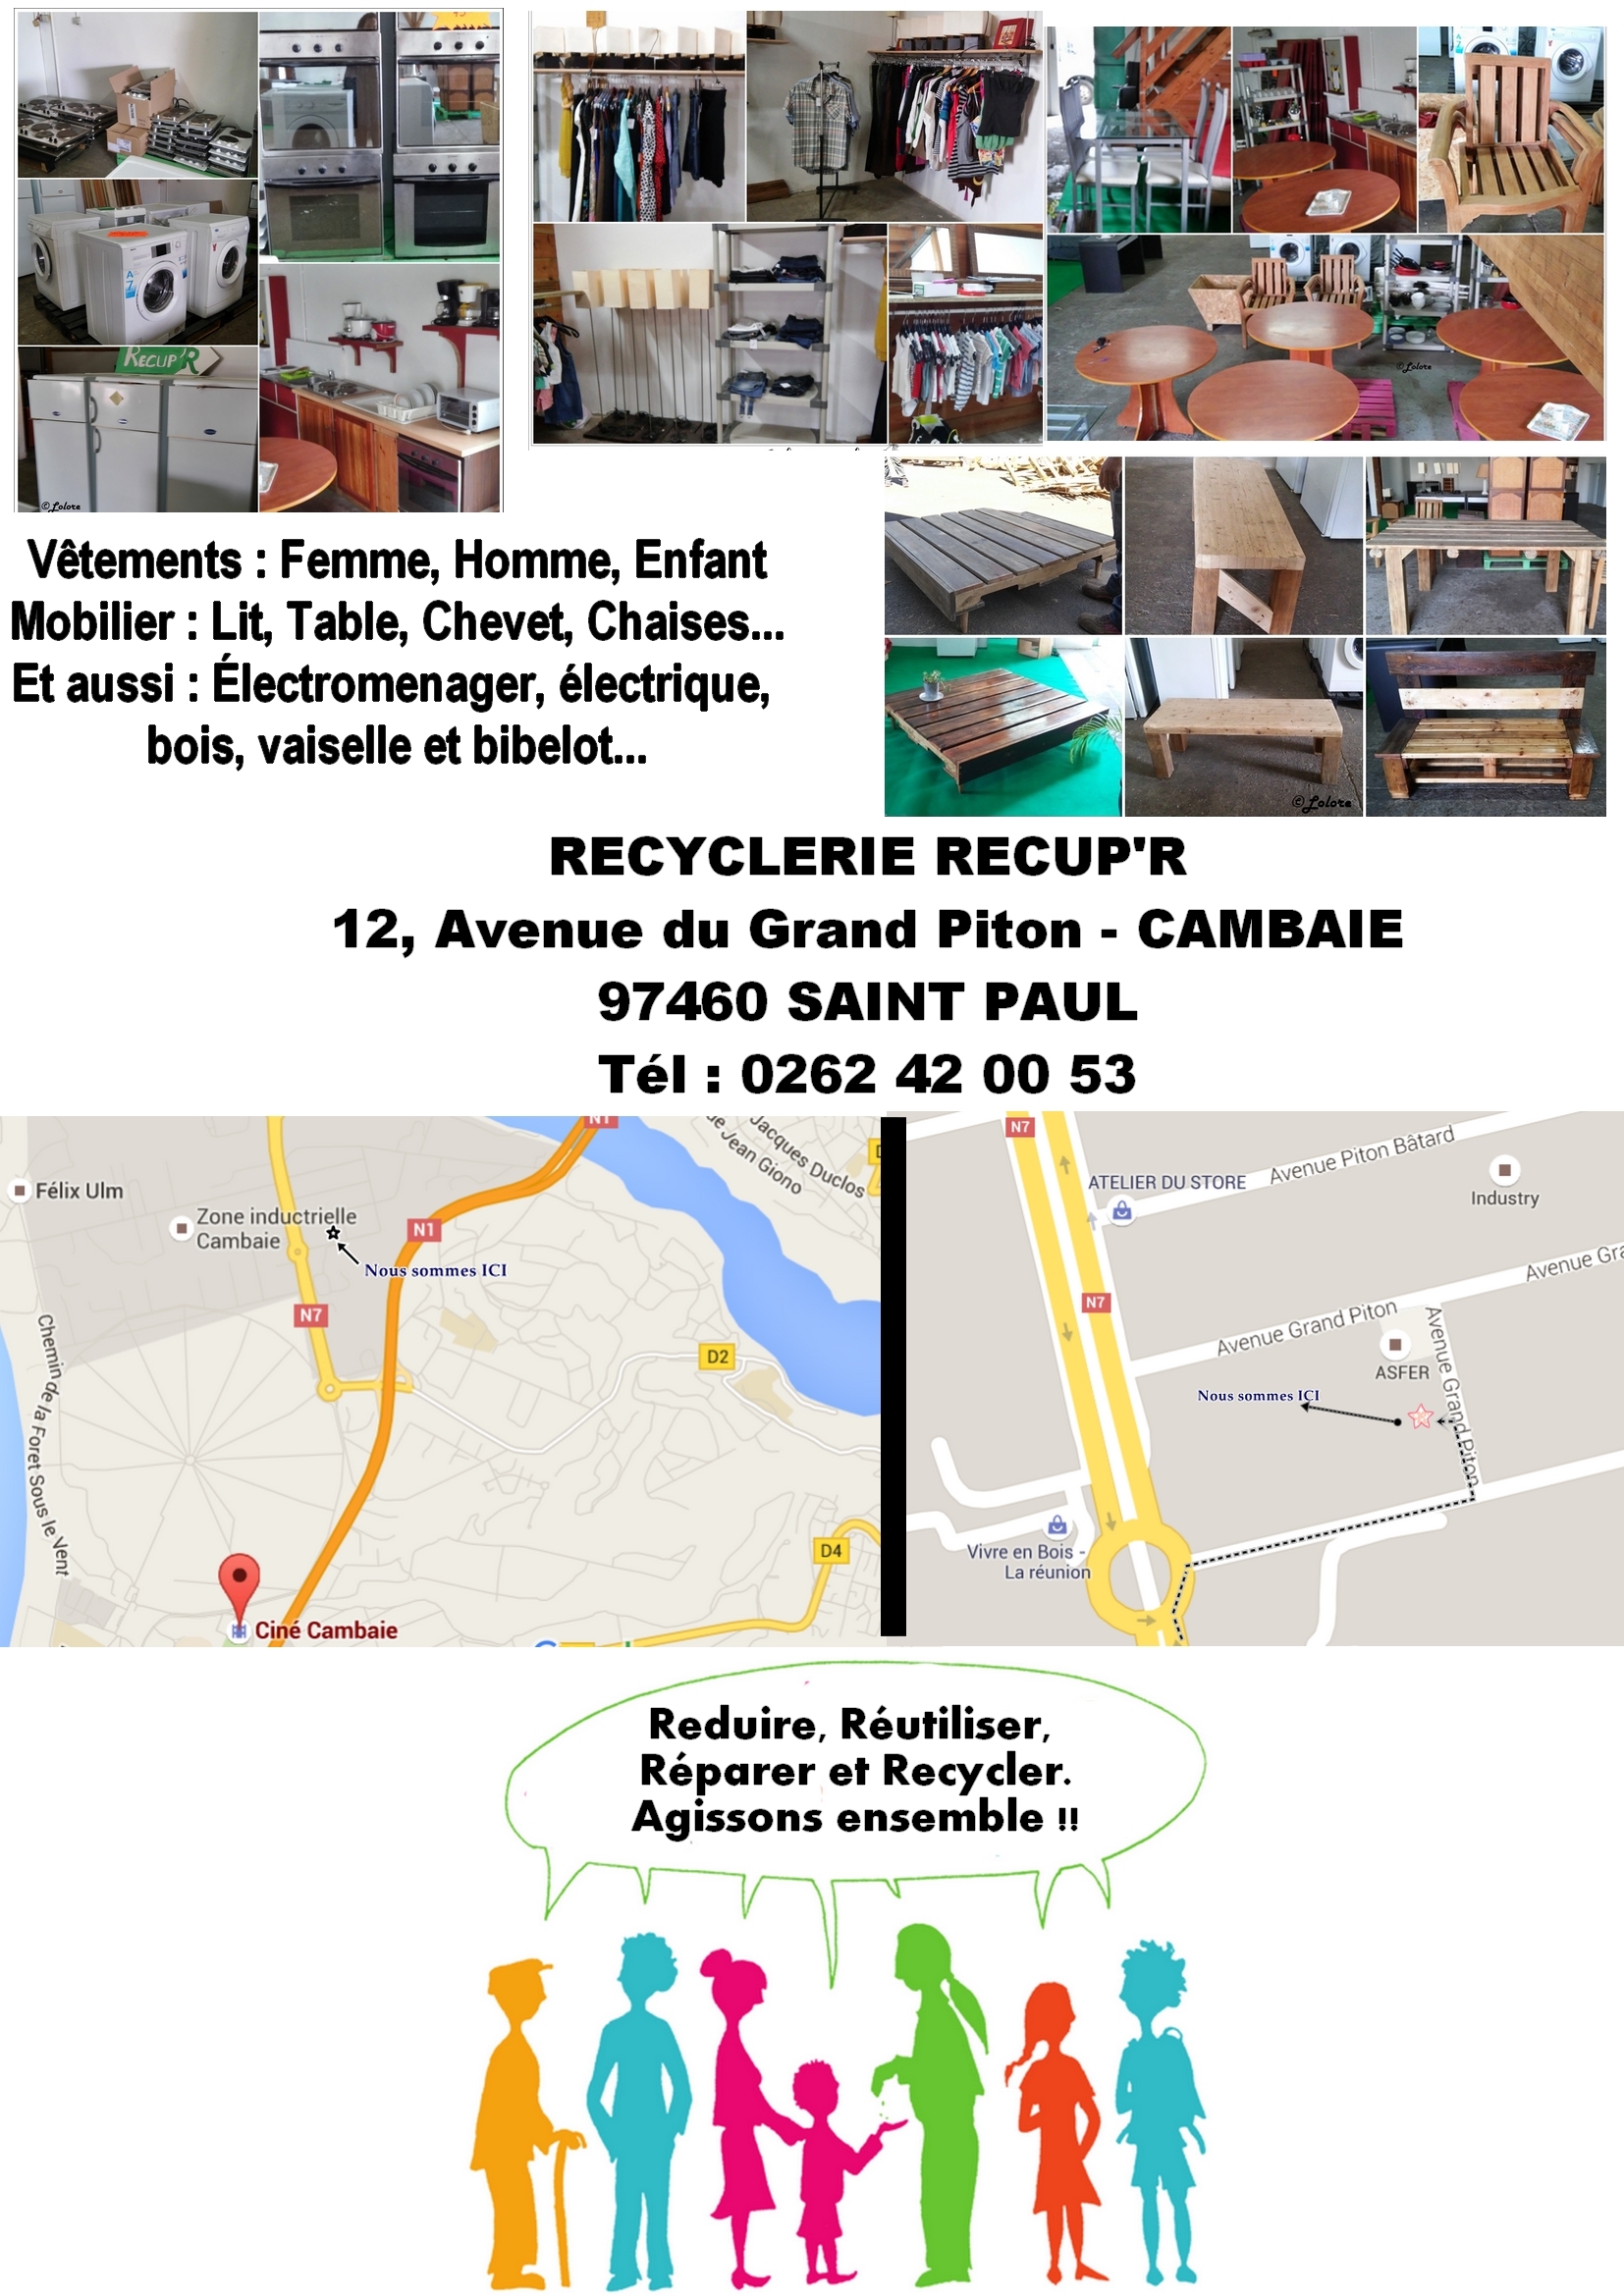 Recyclerie Récup'R